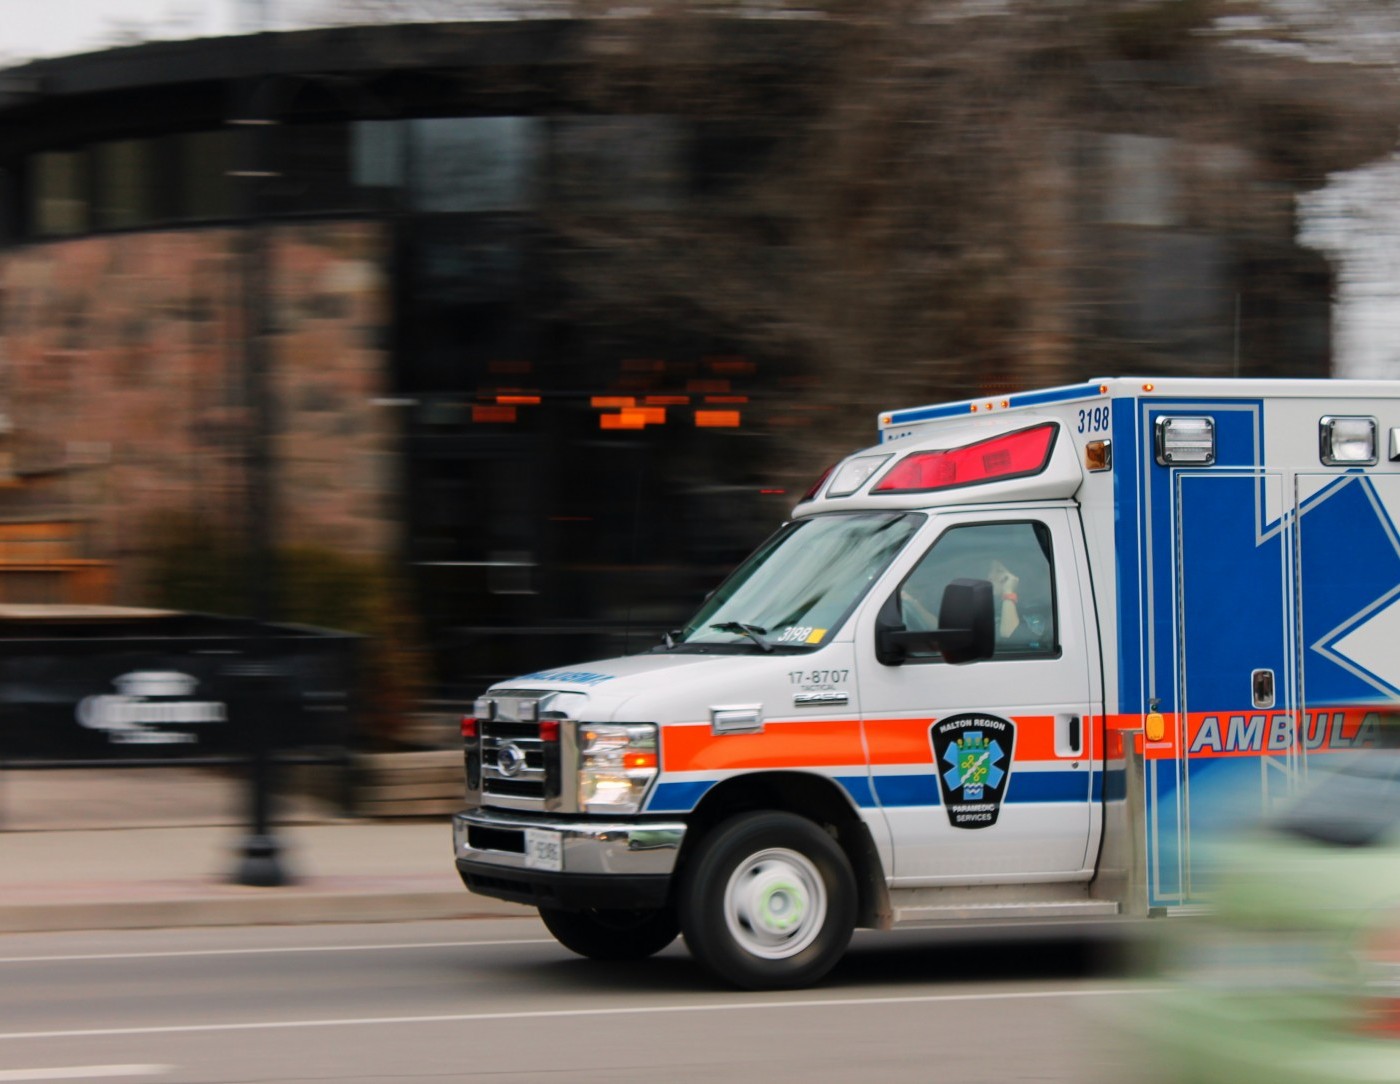 Ambulance_NYC2.jpg